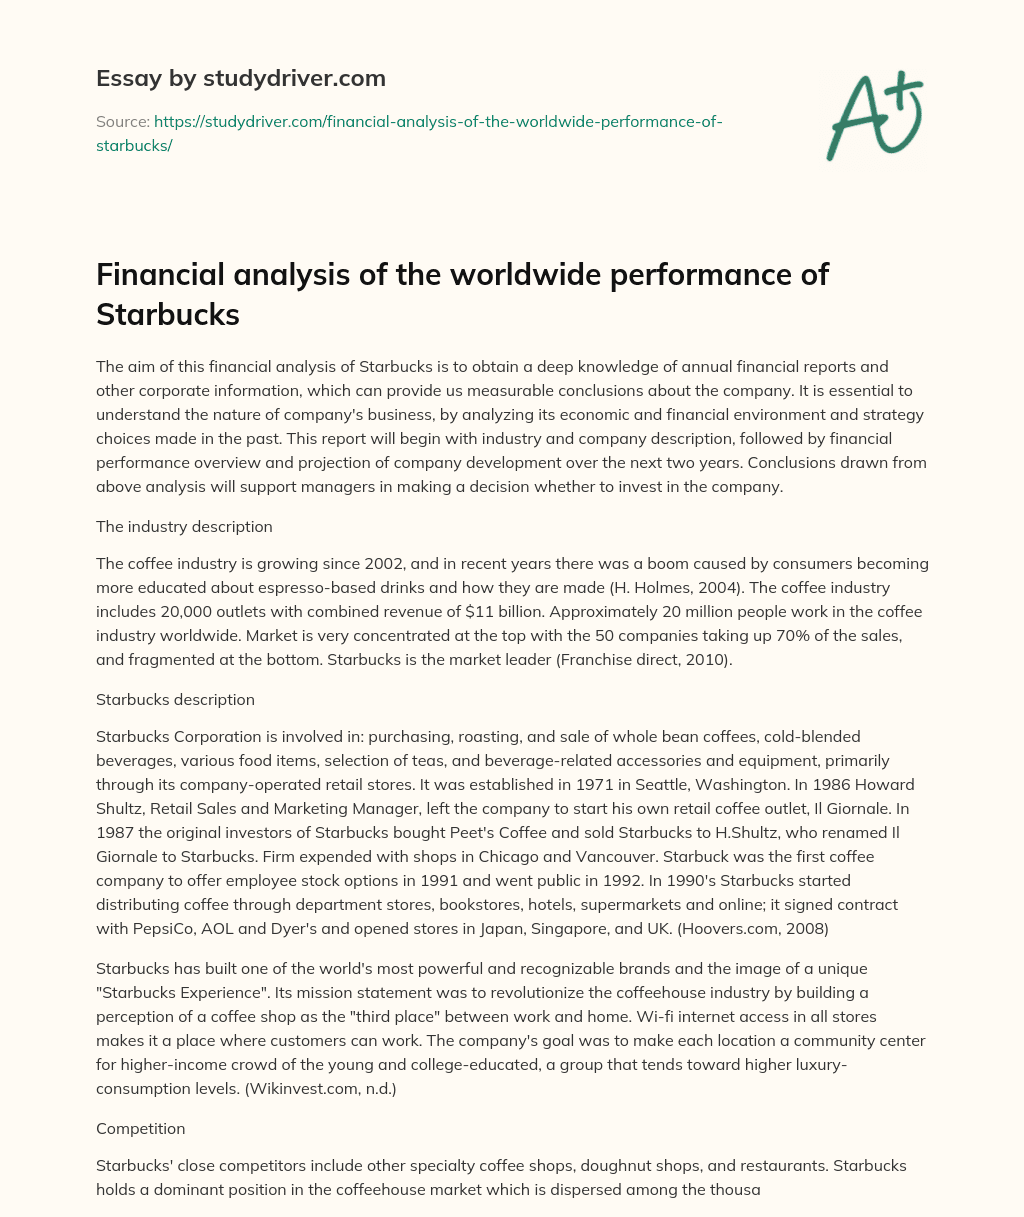 Financial Analysis of the Worldwide Performance of Starbucks essay